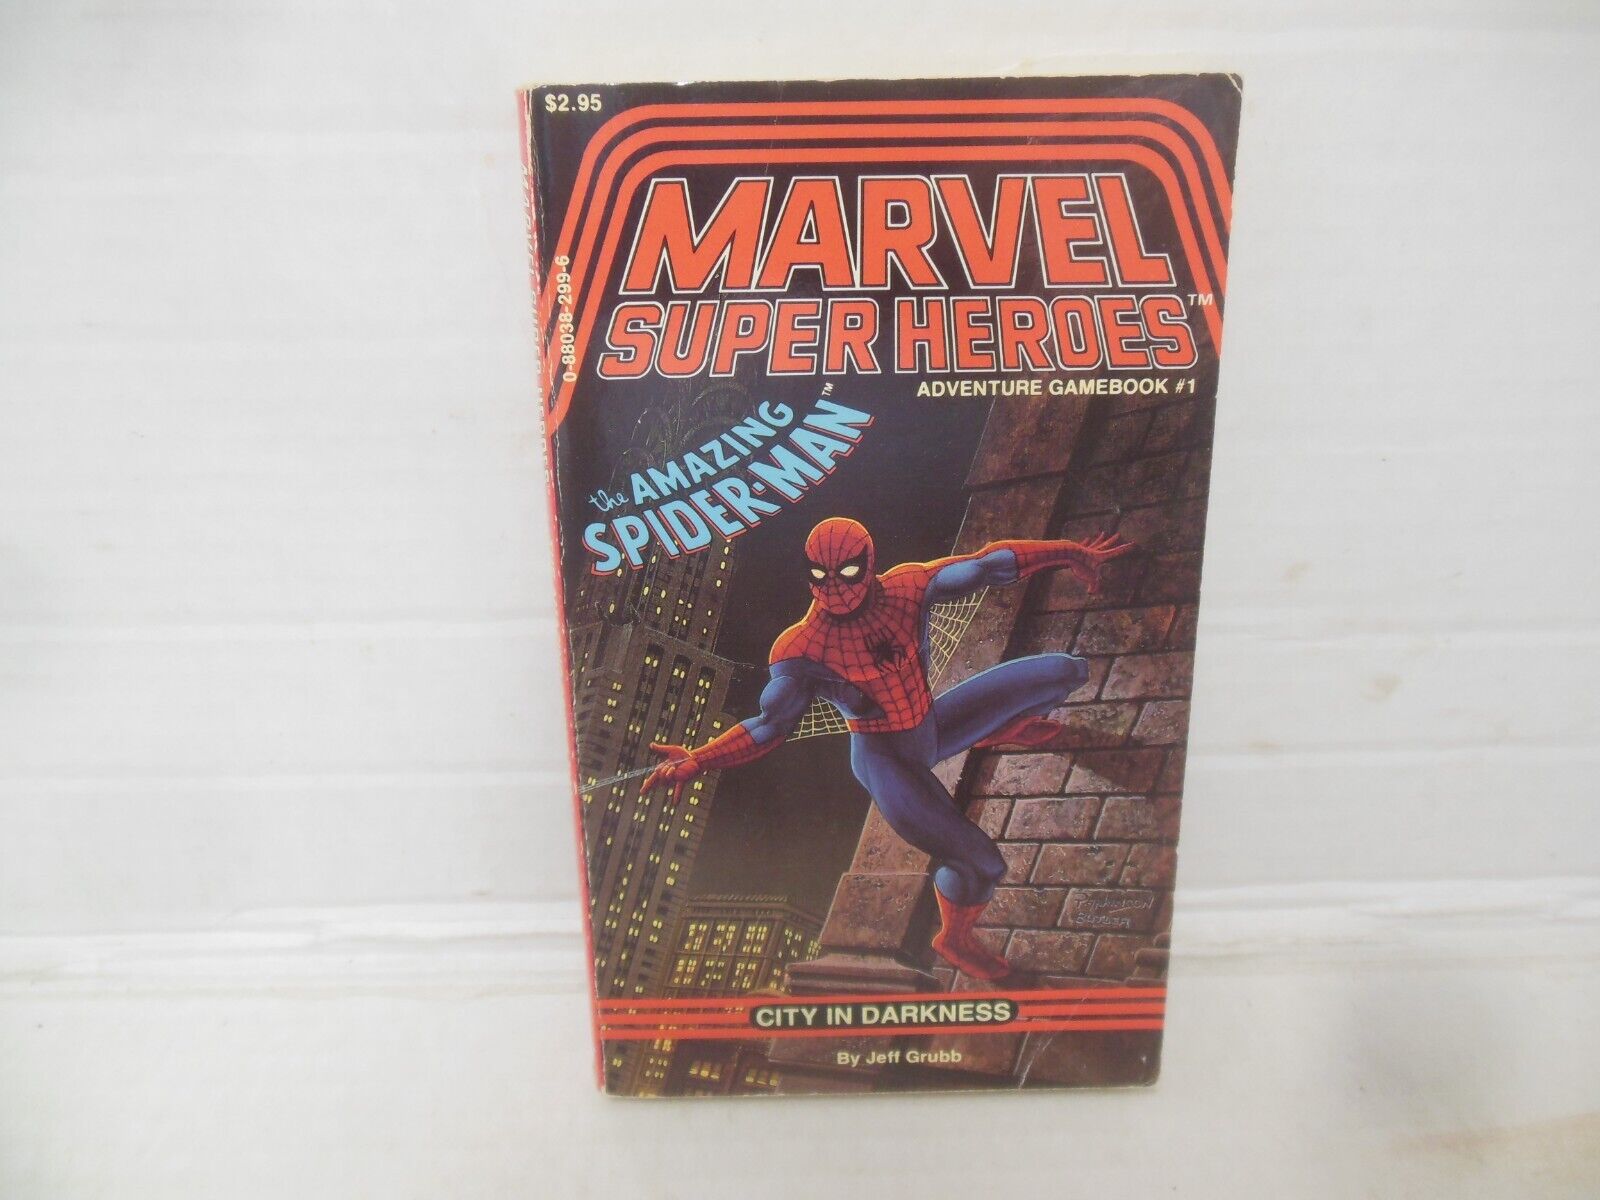 MARVEL SUPER HEROES pocket book ADVENTURE GAMEBOOK #1 AMAZING SPIDER-MAN